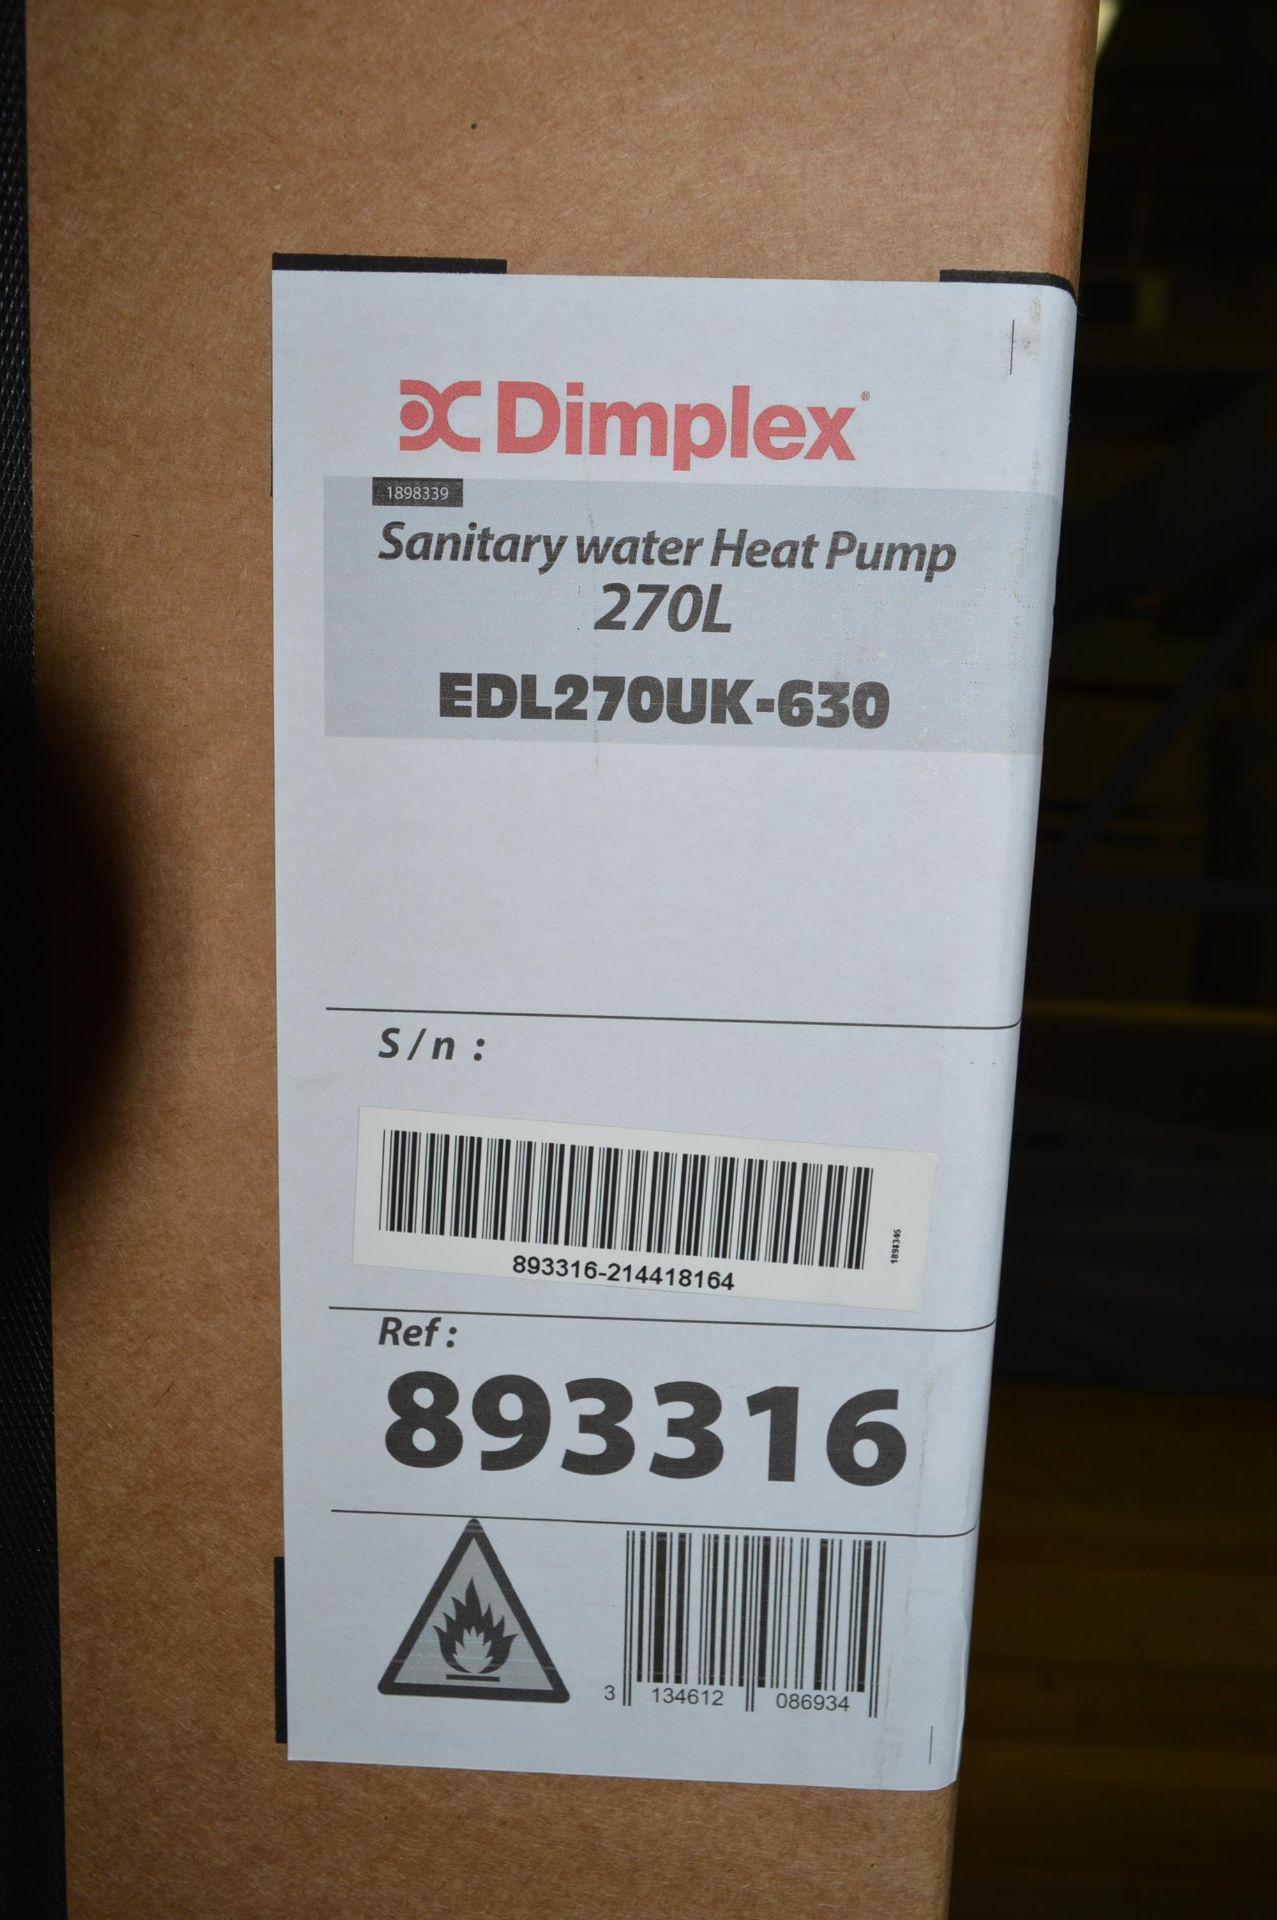 Dimplex, sanitary water heat pump, 270L, Model EDL270UK-630, Serial No. 893316-214418164 (packaged) - Image 2 of 2